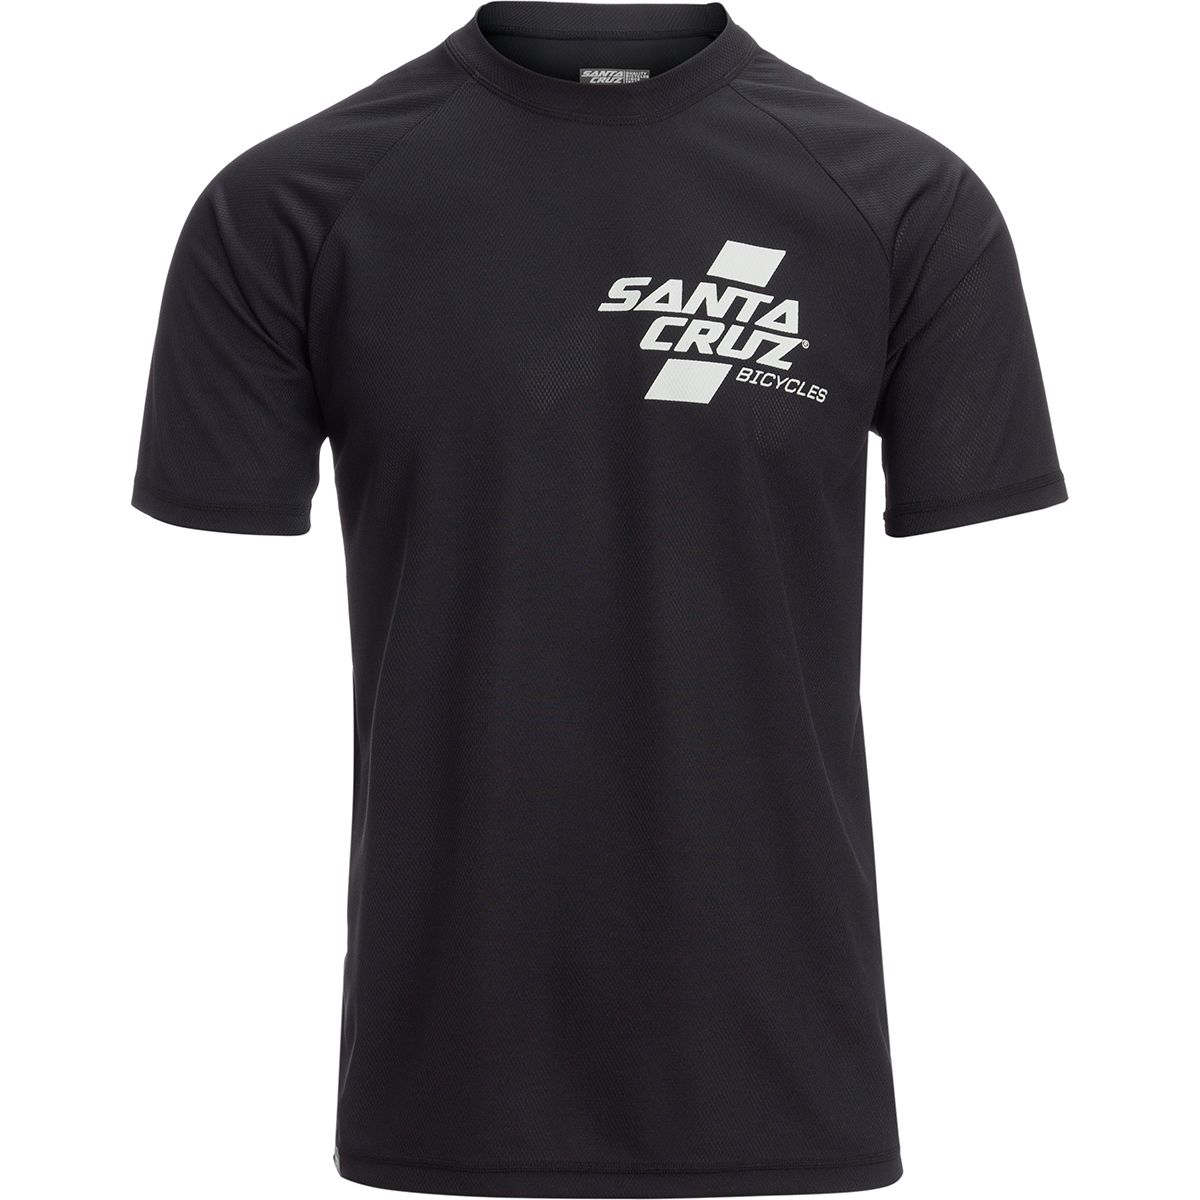 Santa Cruz Bicycles Parallel Tech T-Shirt - Men's